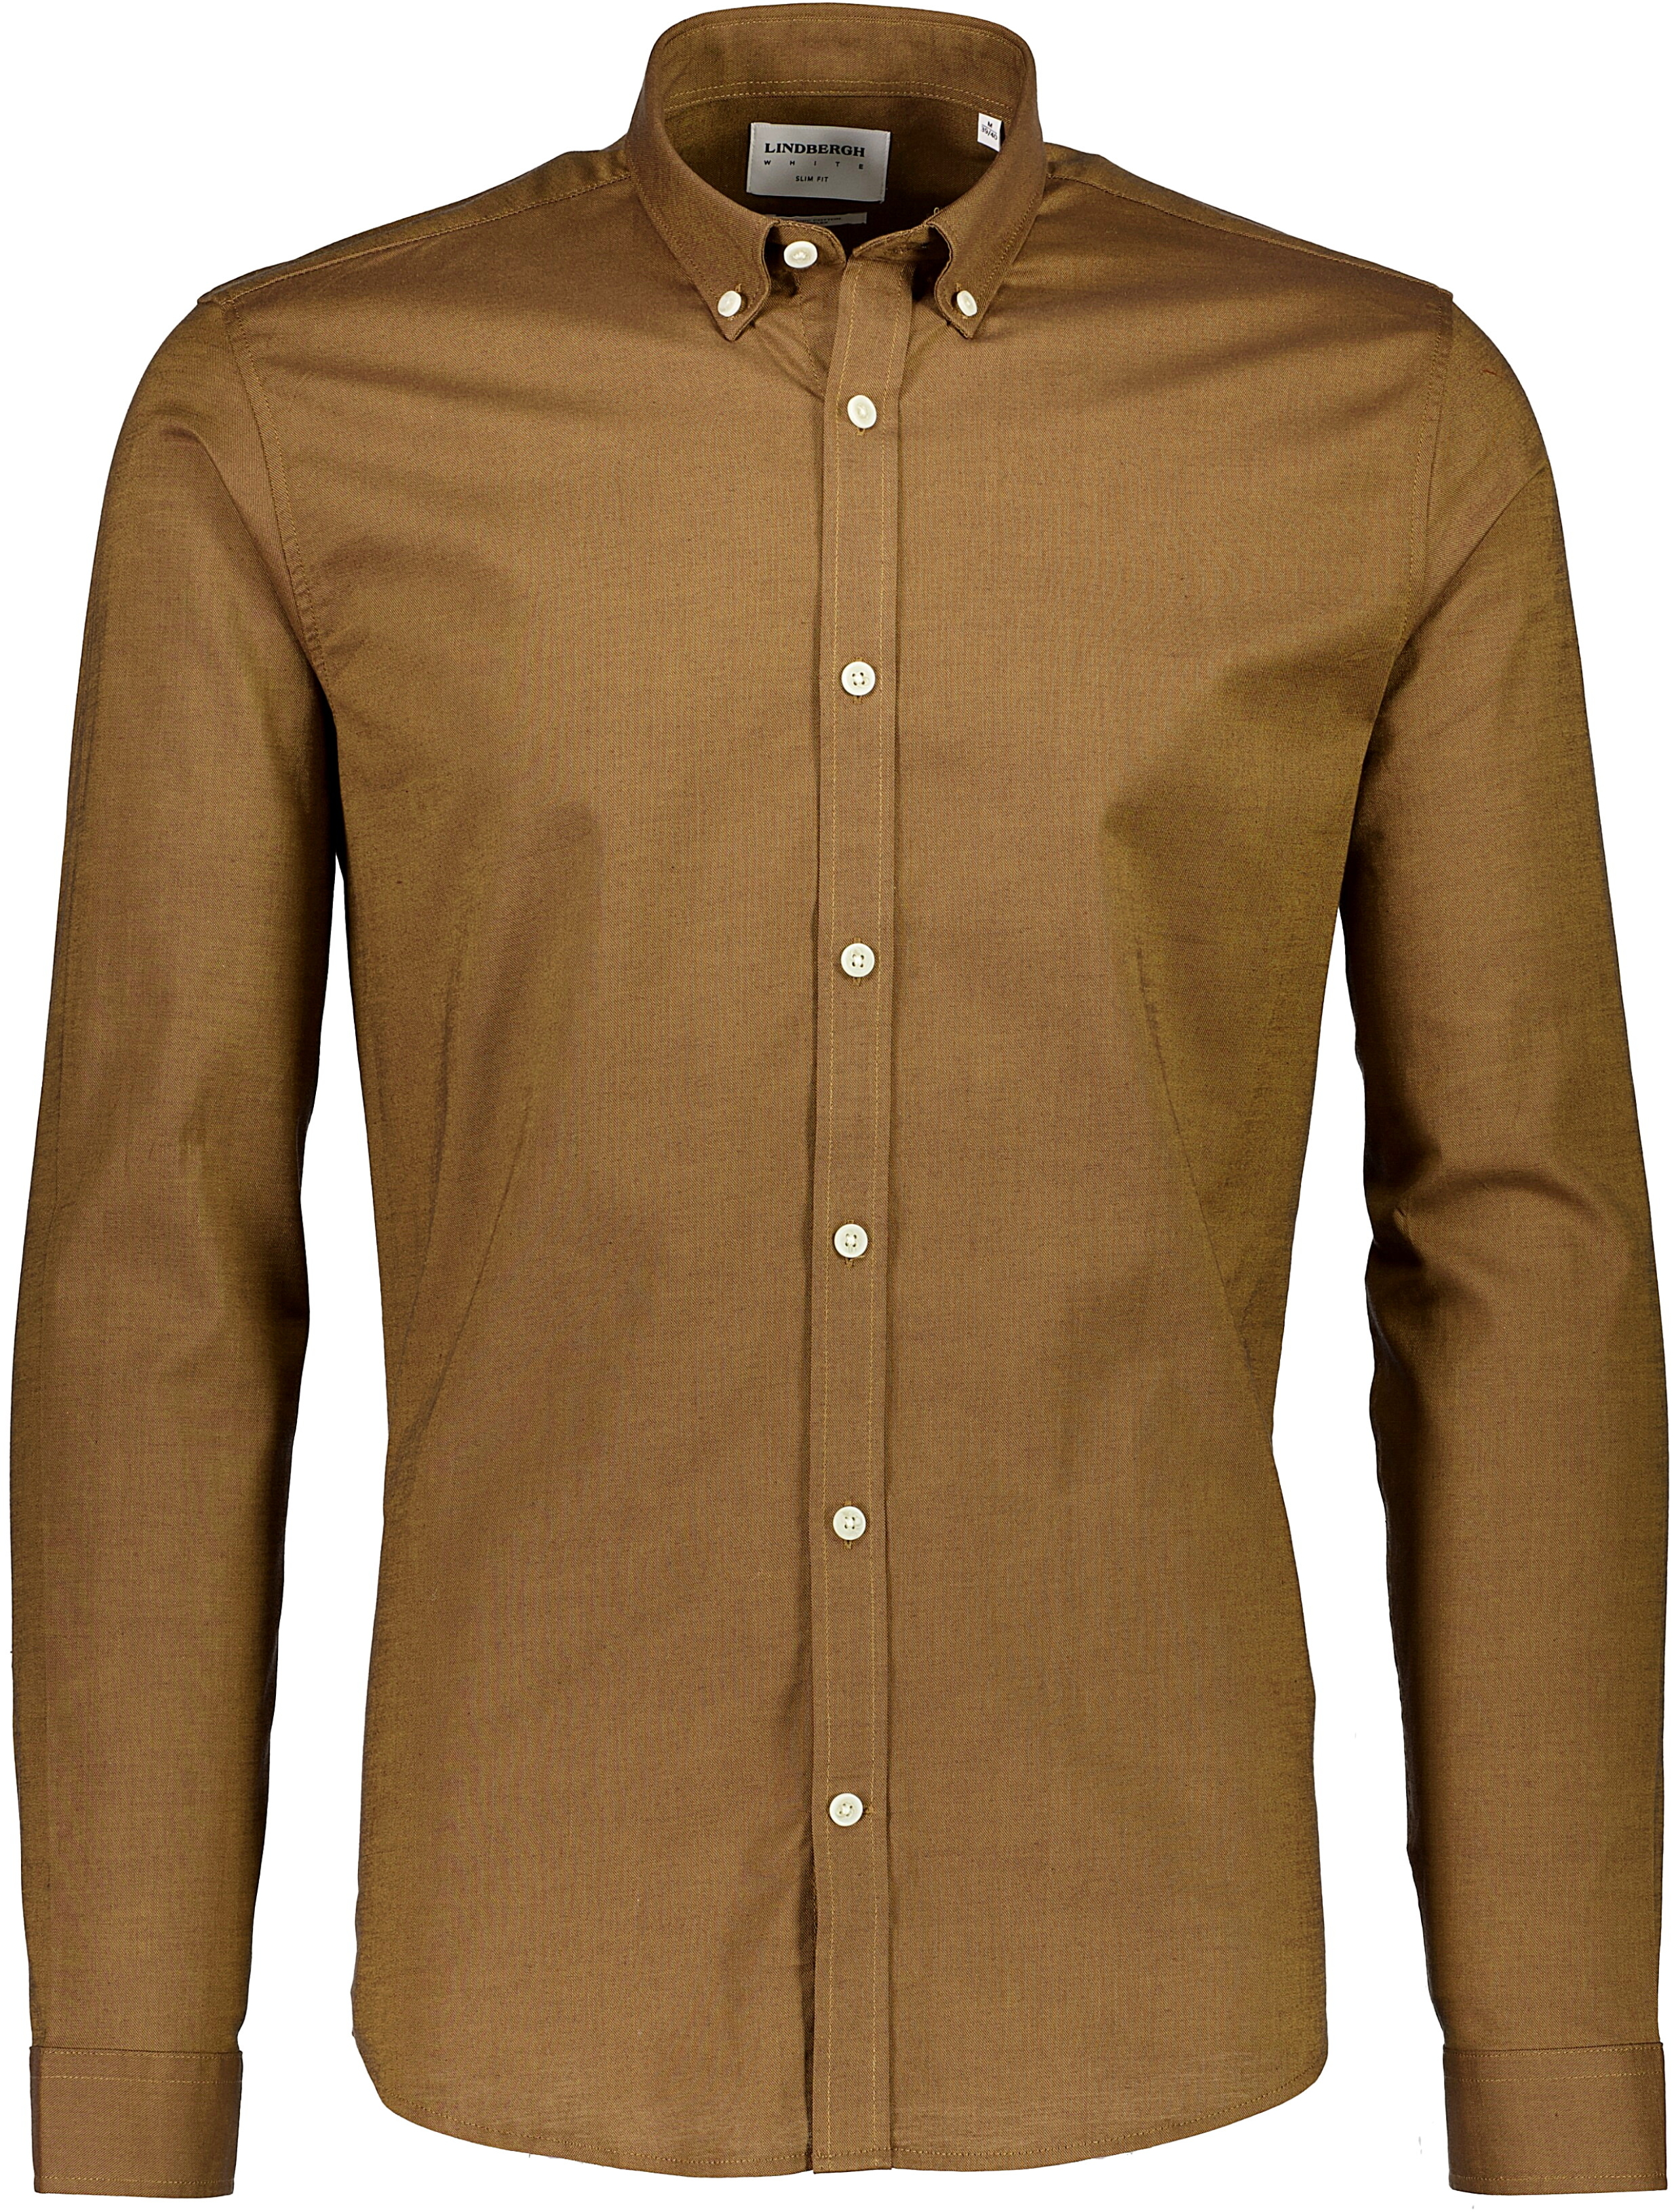 Lindbergh Oxford shirt brown / brown